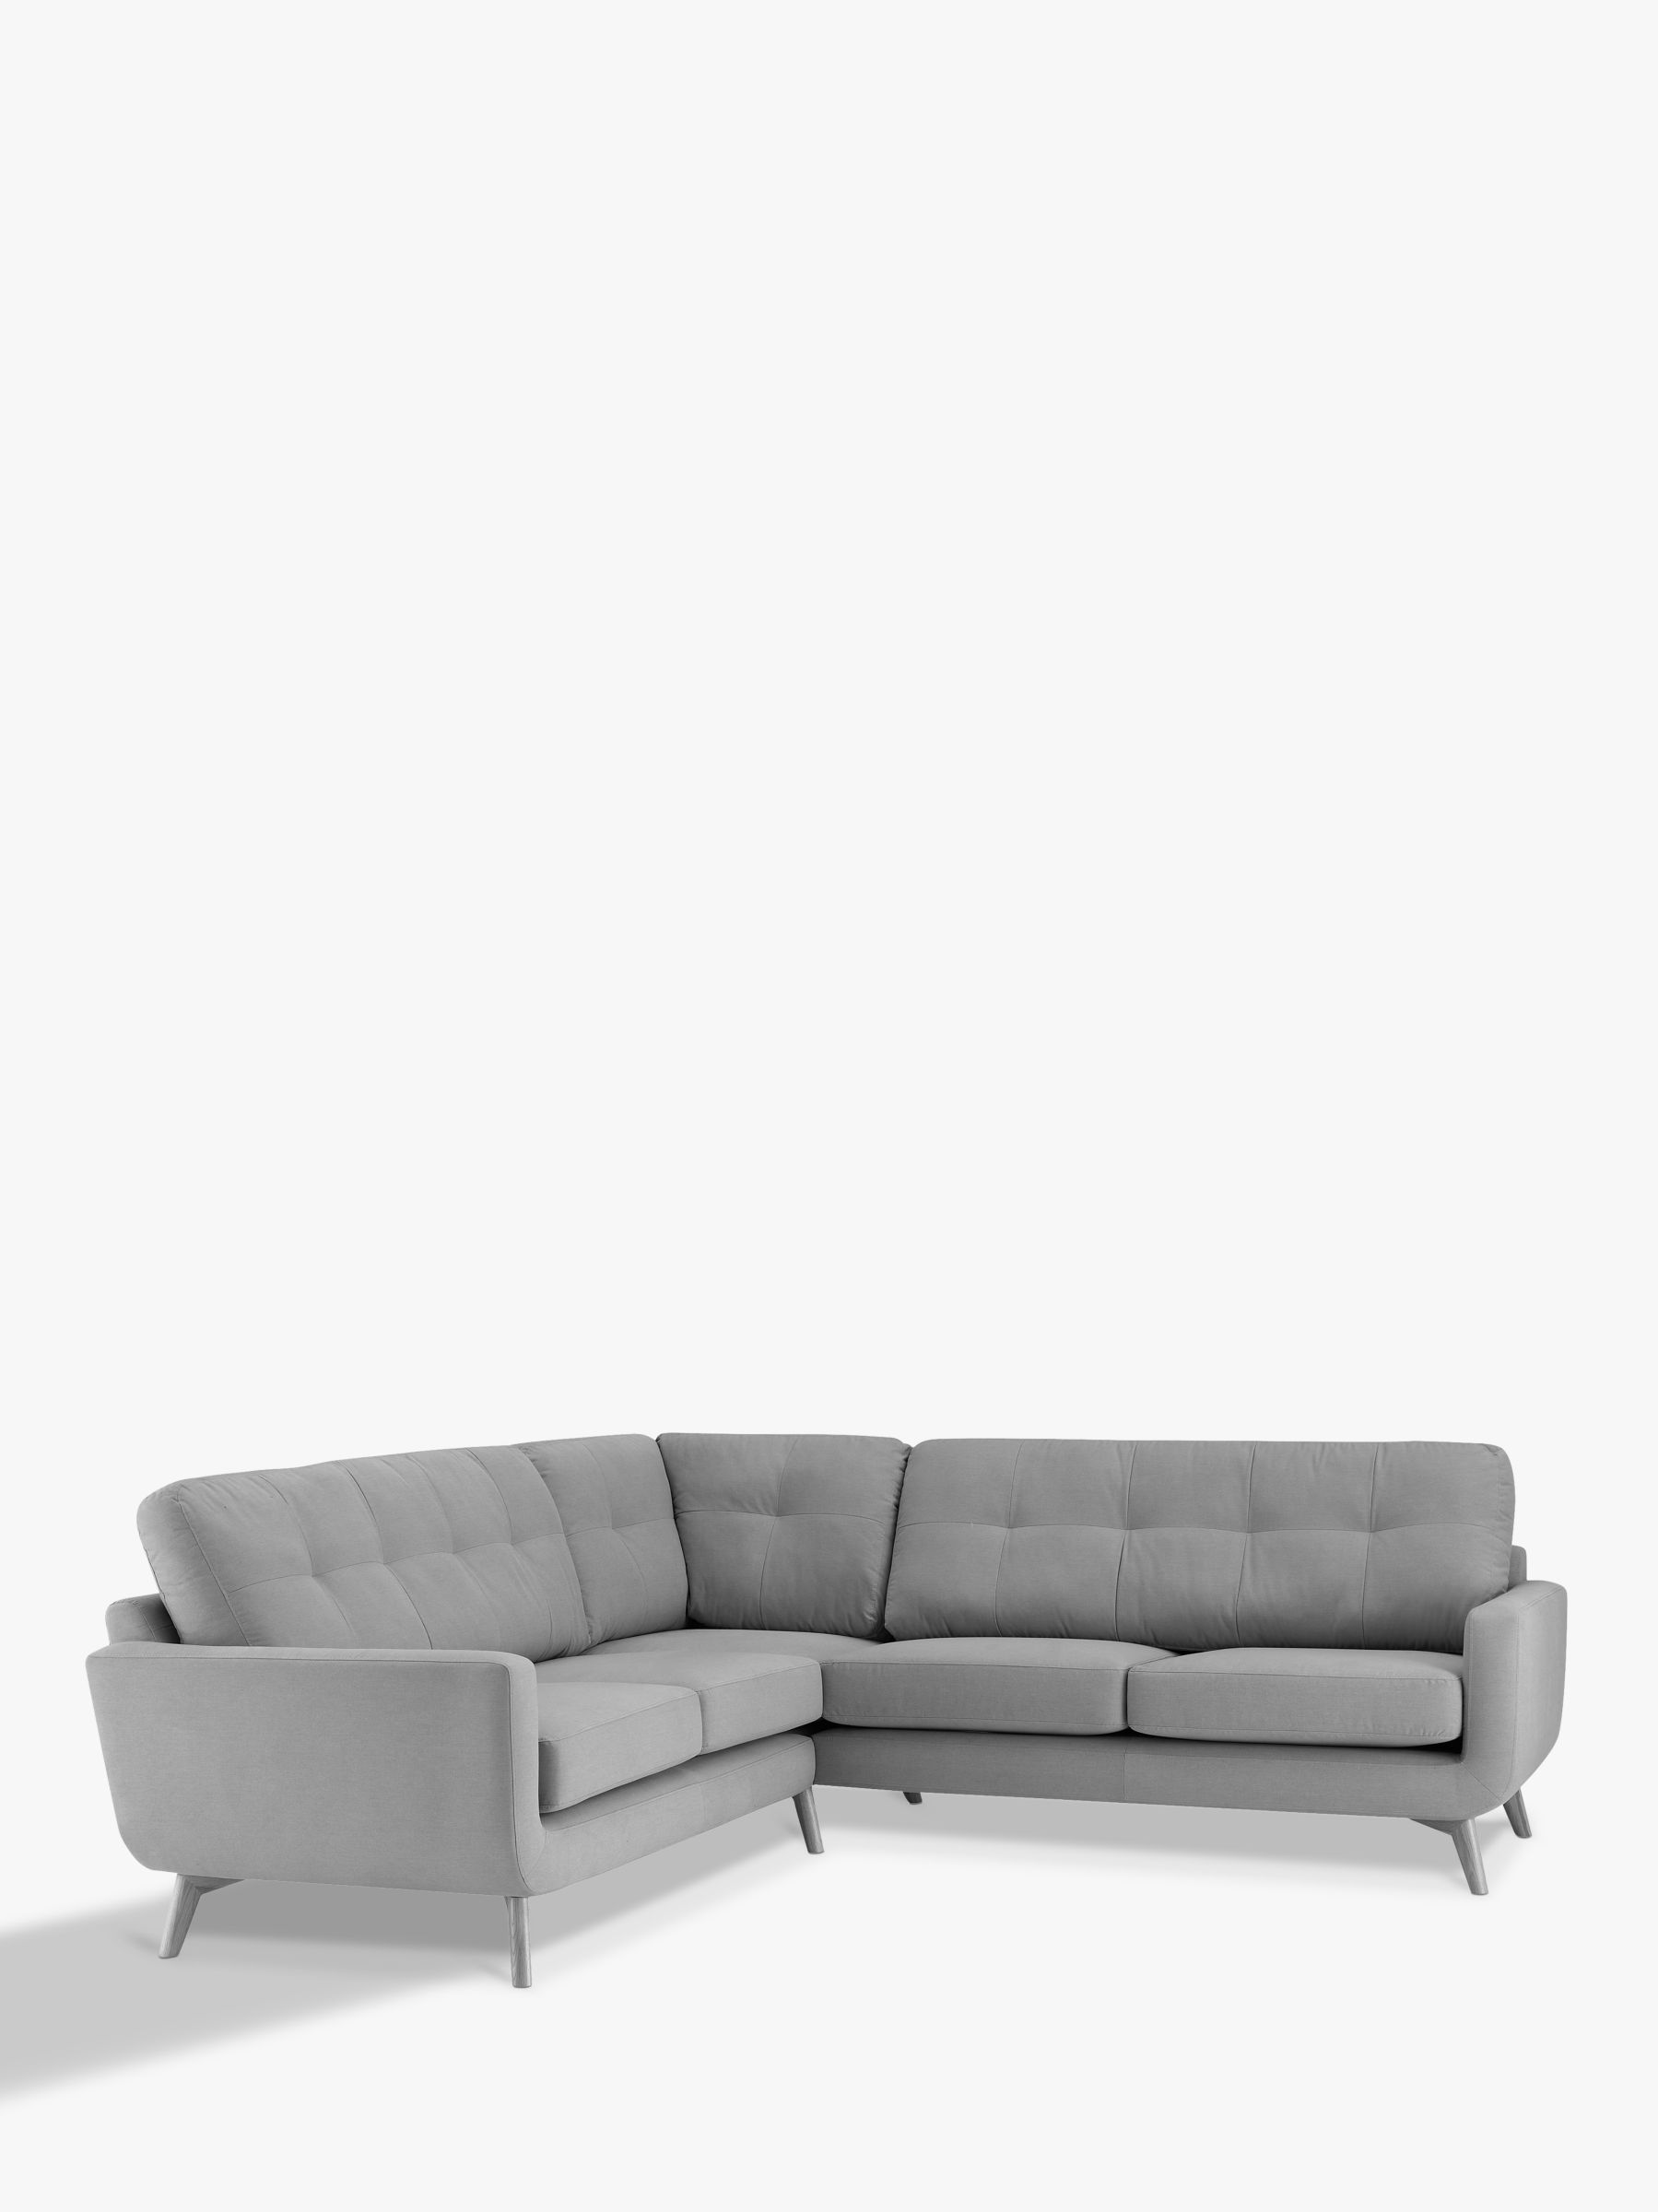 Photo of John lewis barbican 5+ seater corner sofa